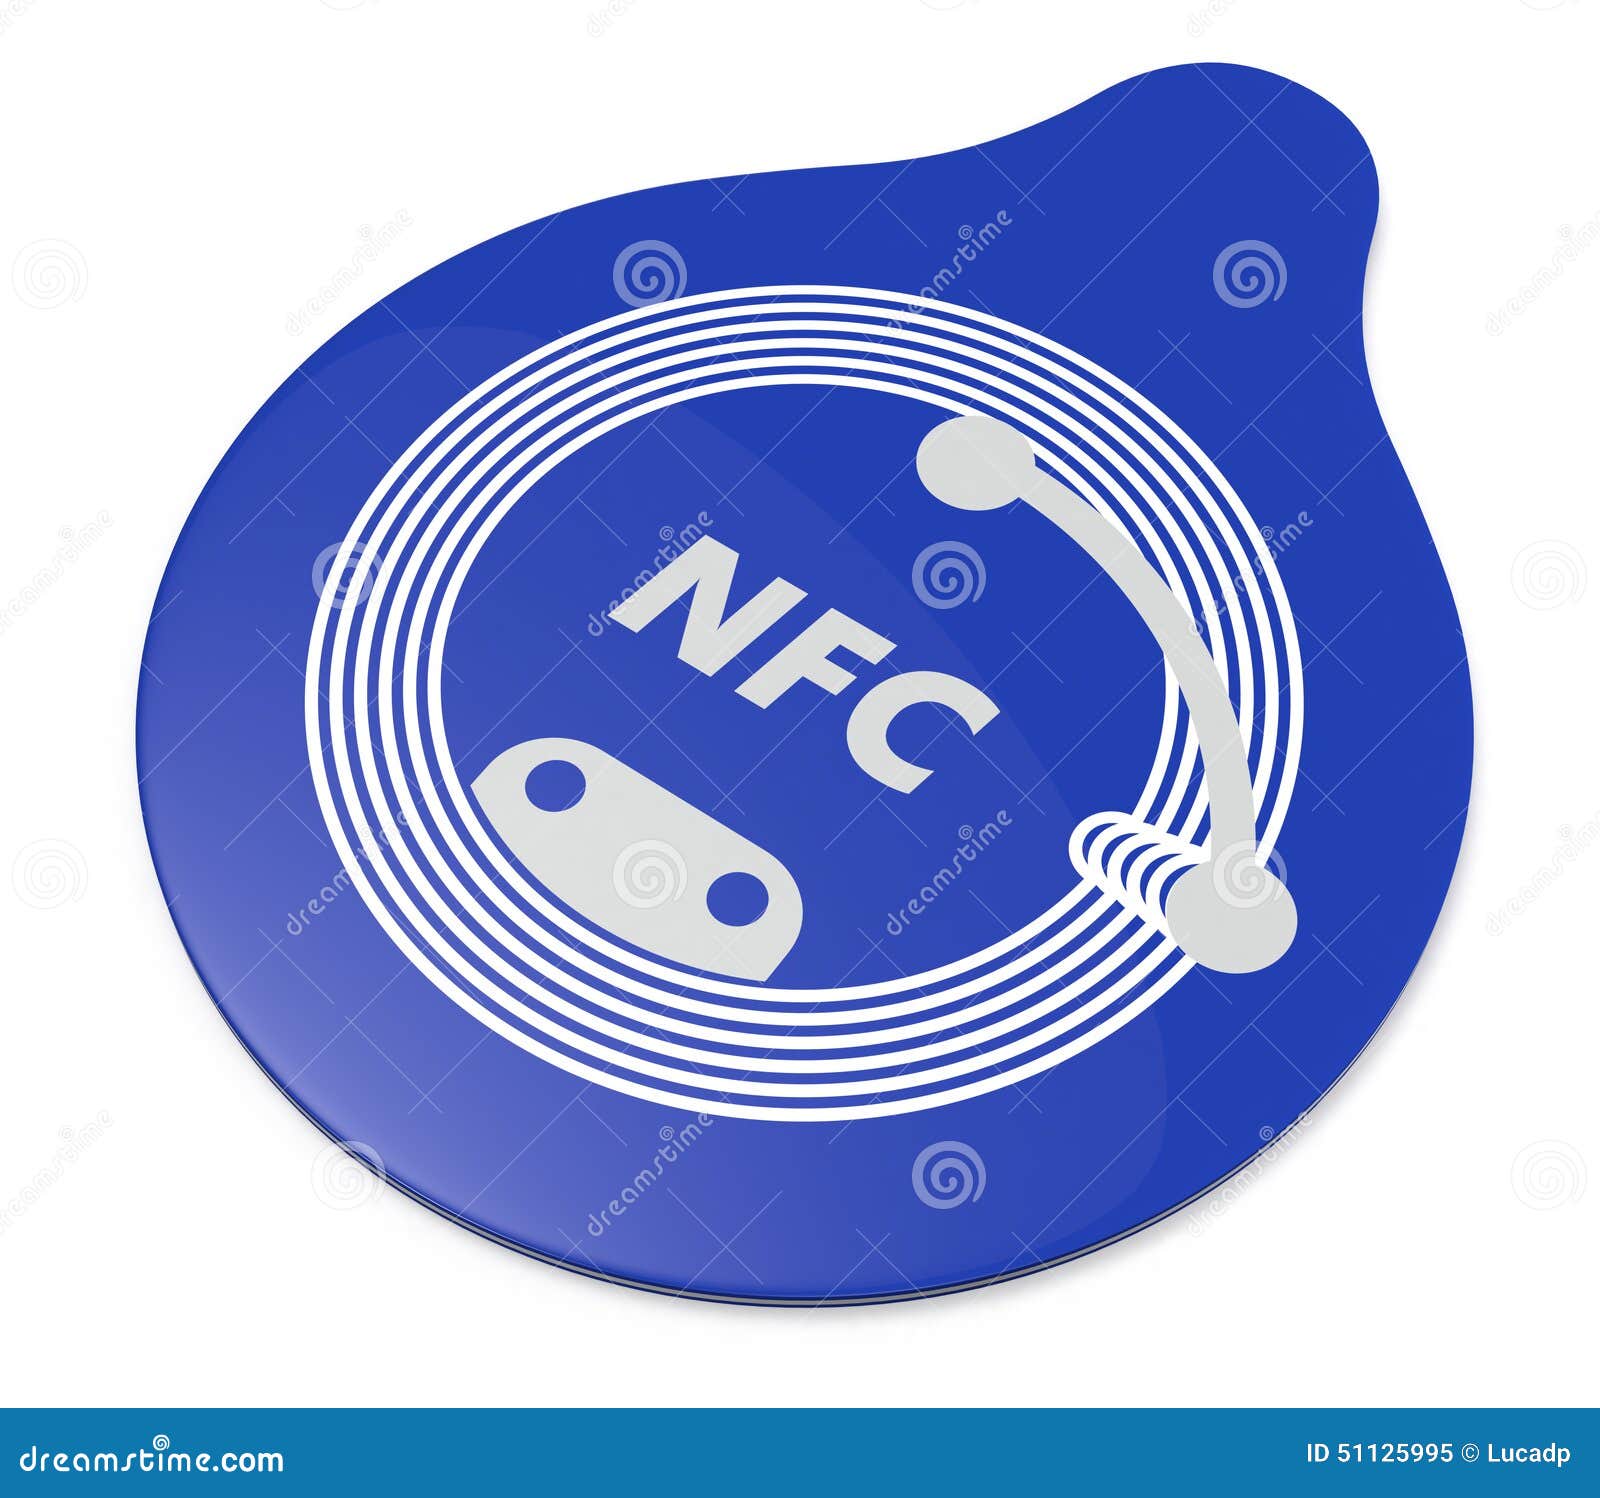 Nfc tag stock illustration. Illustration of mobile, business - 51125995